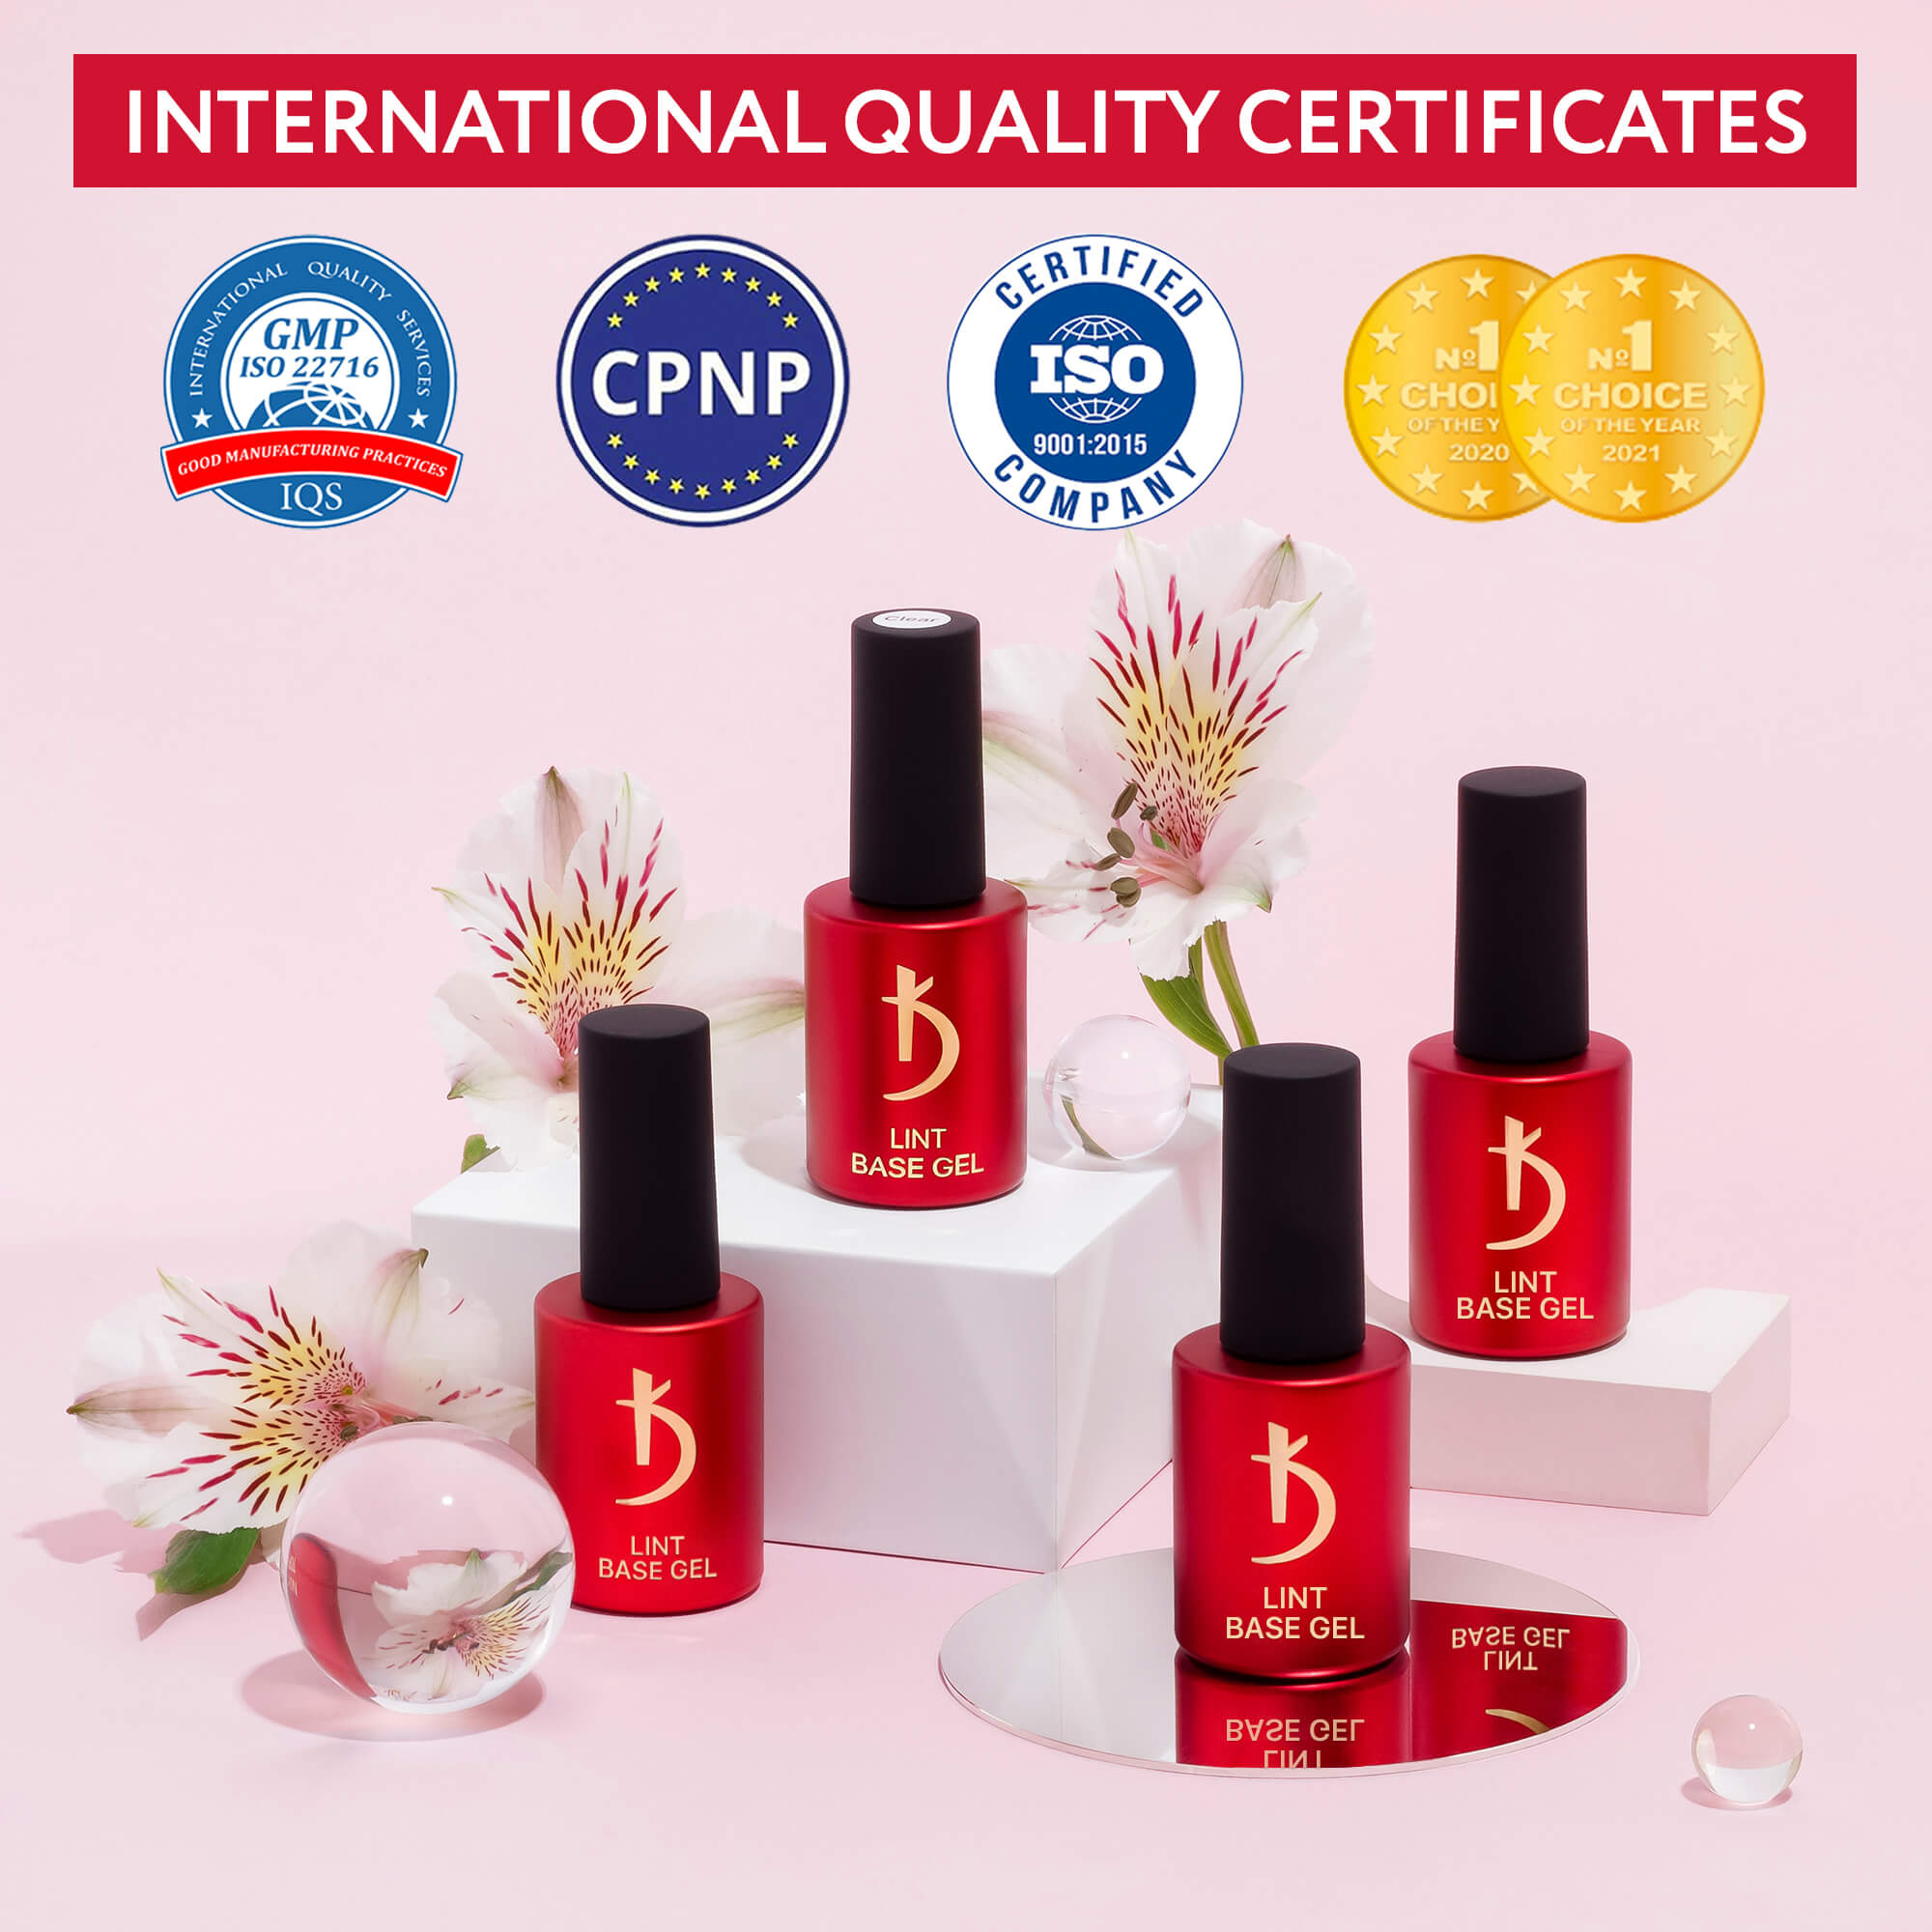 Lint Base International Certificates